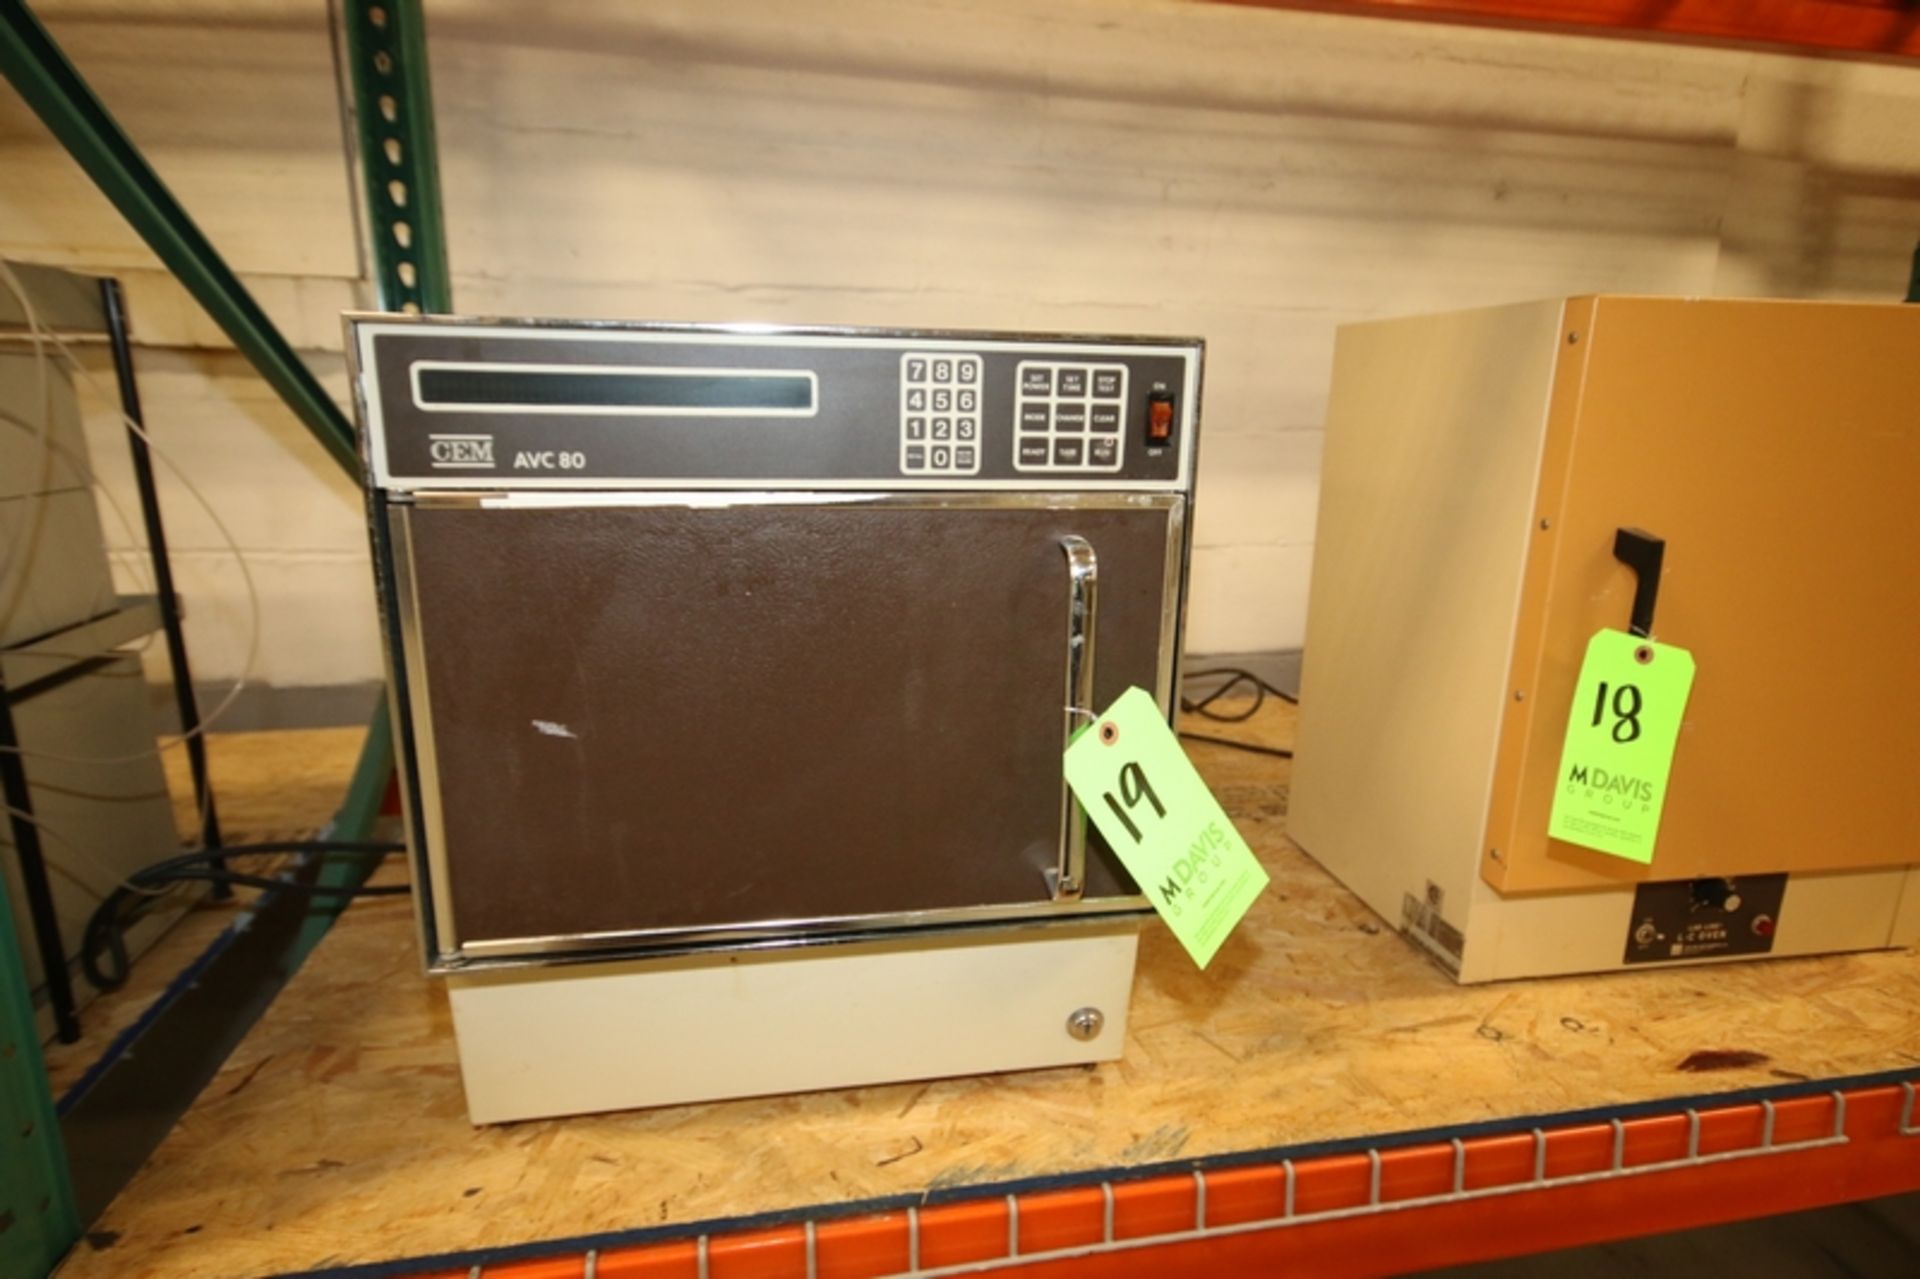 CEM Lab Microwave, Model AVC 80, S/N 3251